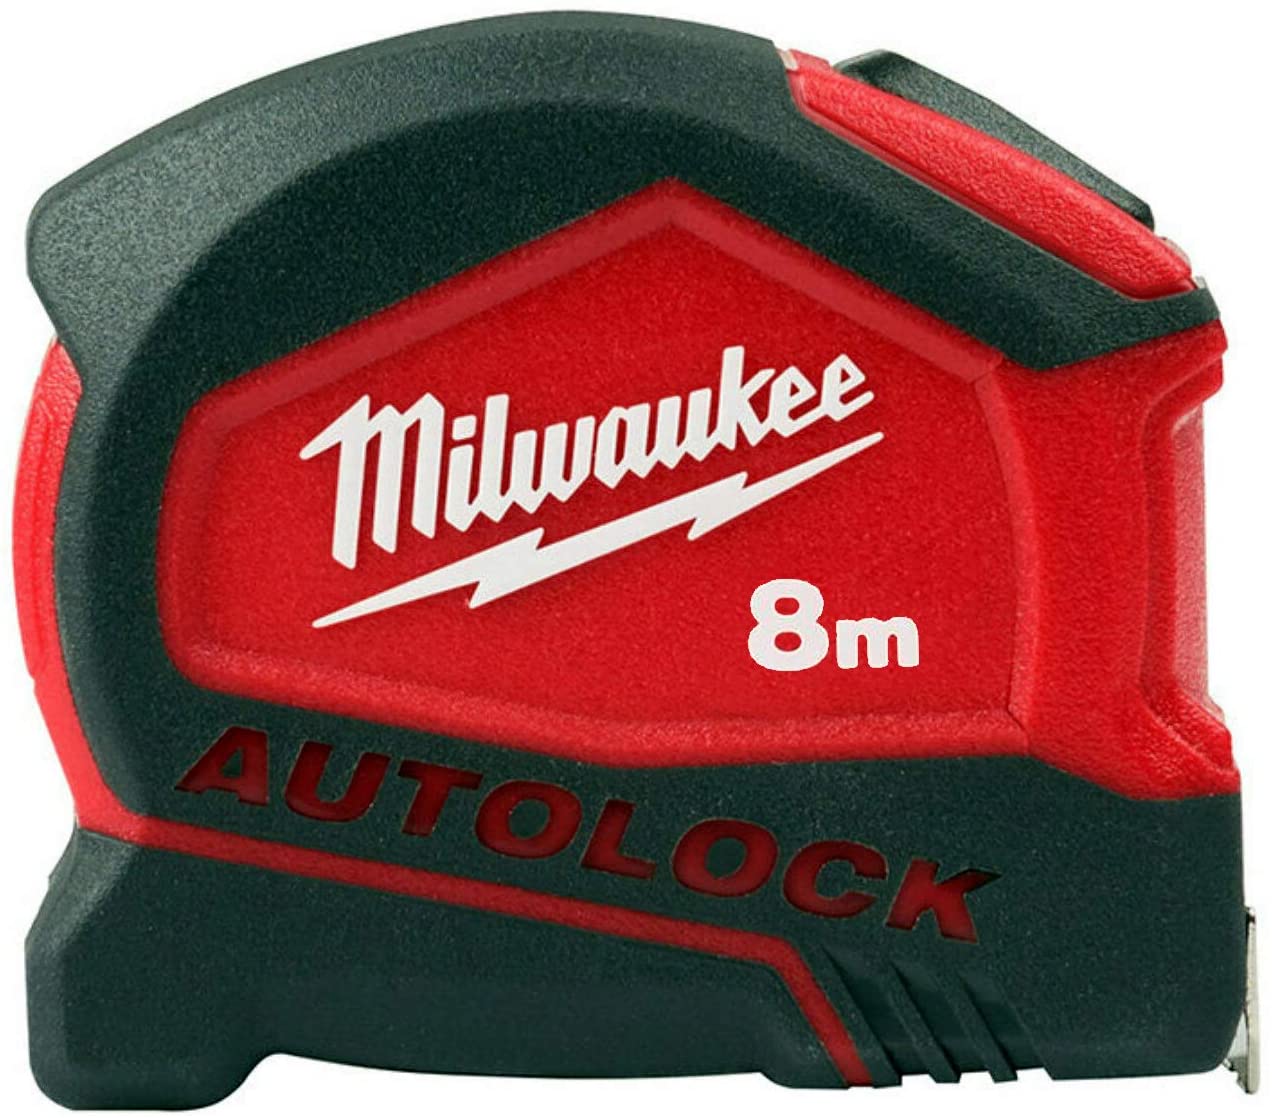 Milwaukee T4932464664 Ağır Hizmet Tipi Autolock Şerit Metre 8m